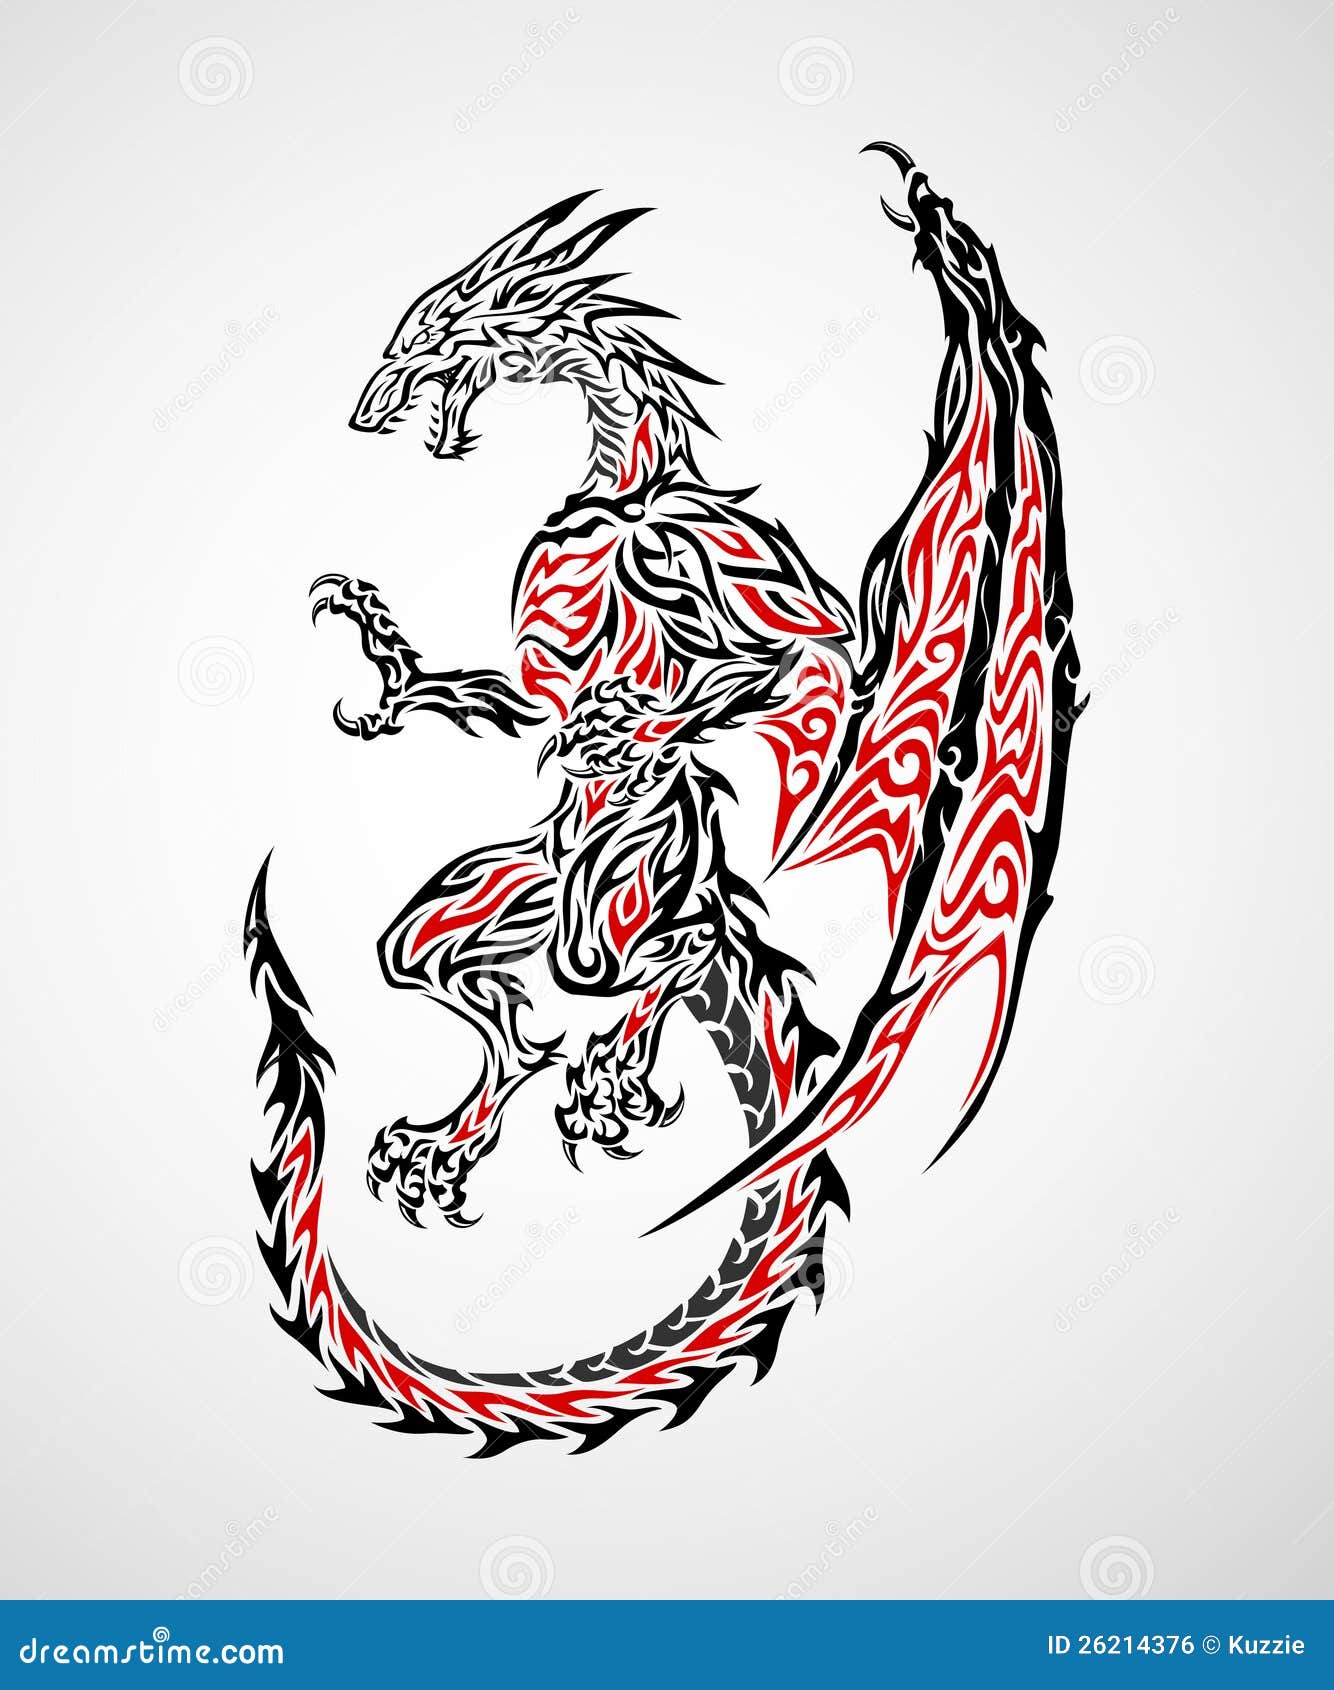 1483 Celtic Dragon Tattoo Images Stock Photos  Vectors  Shutterstock